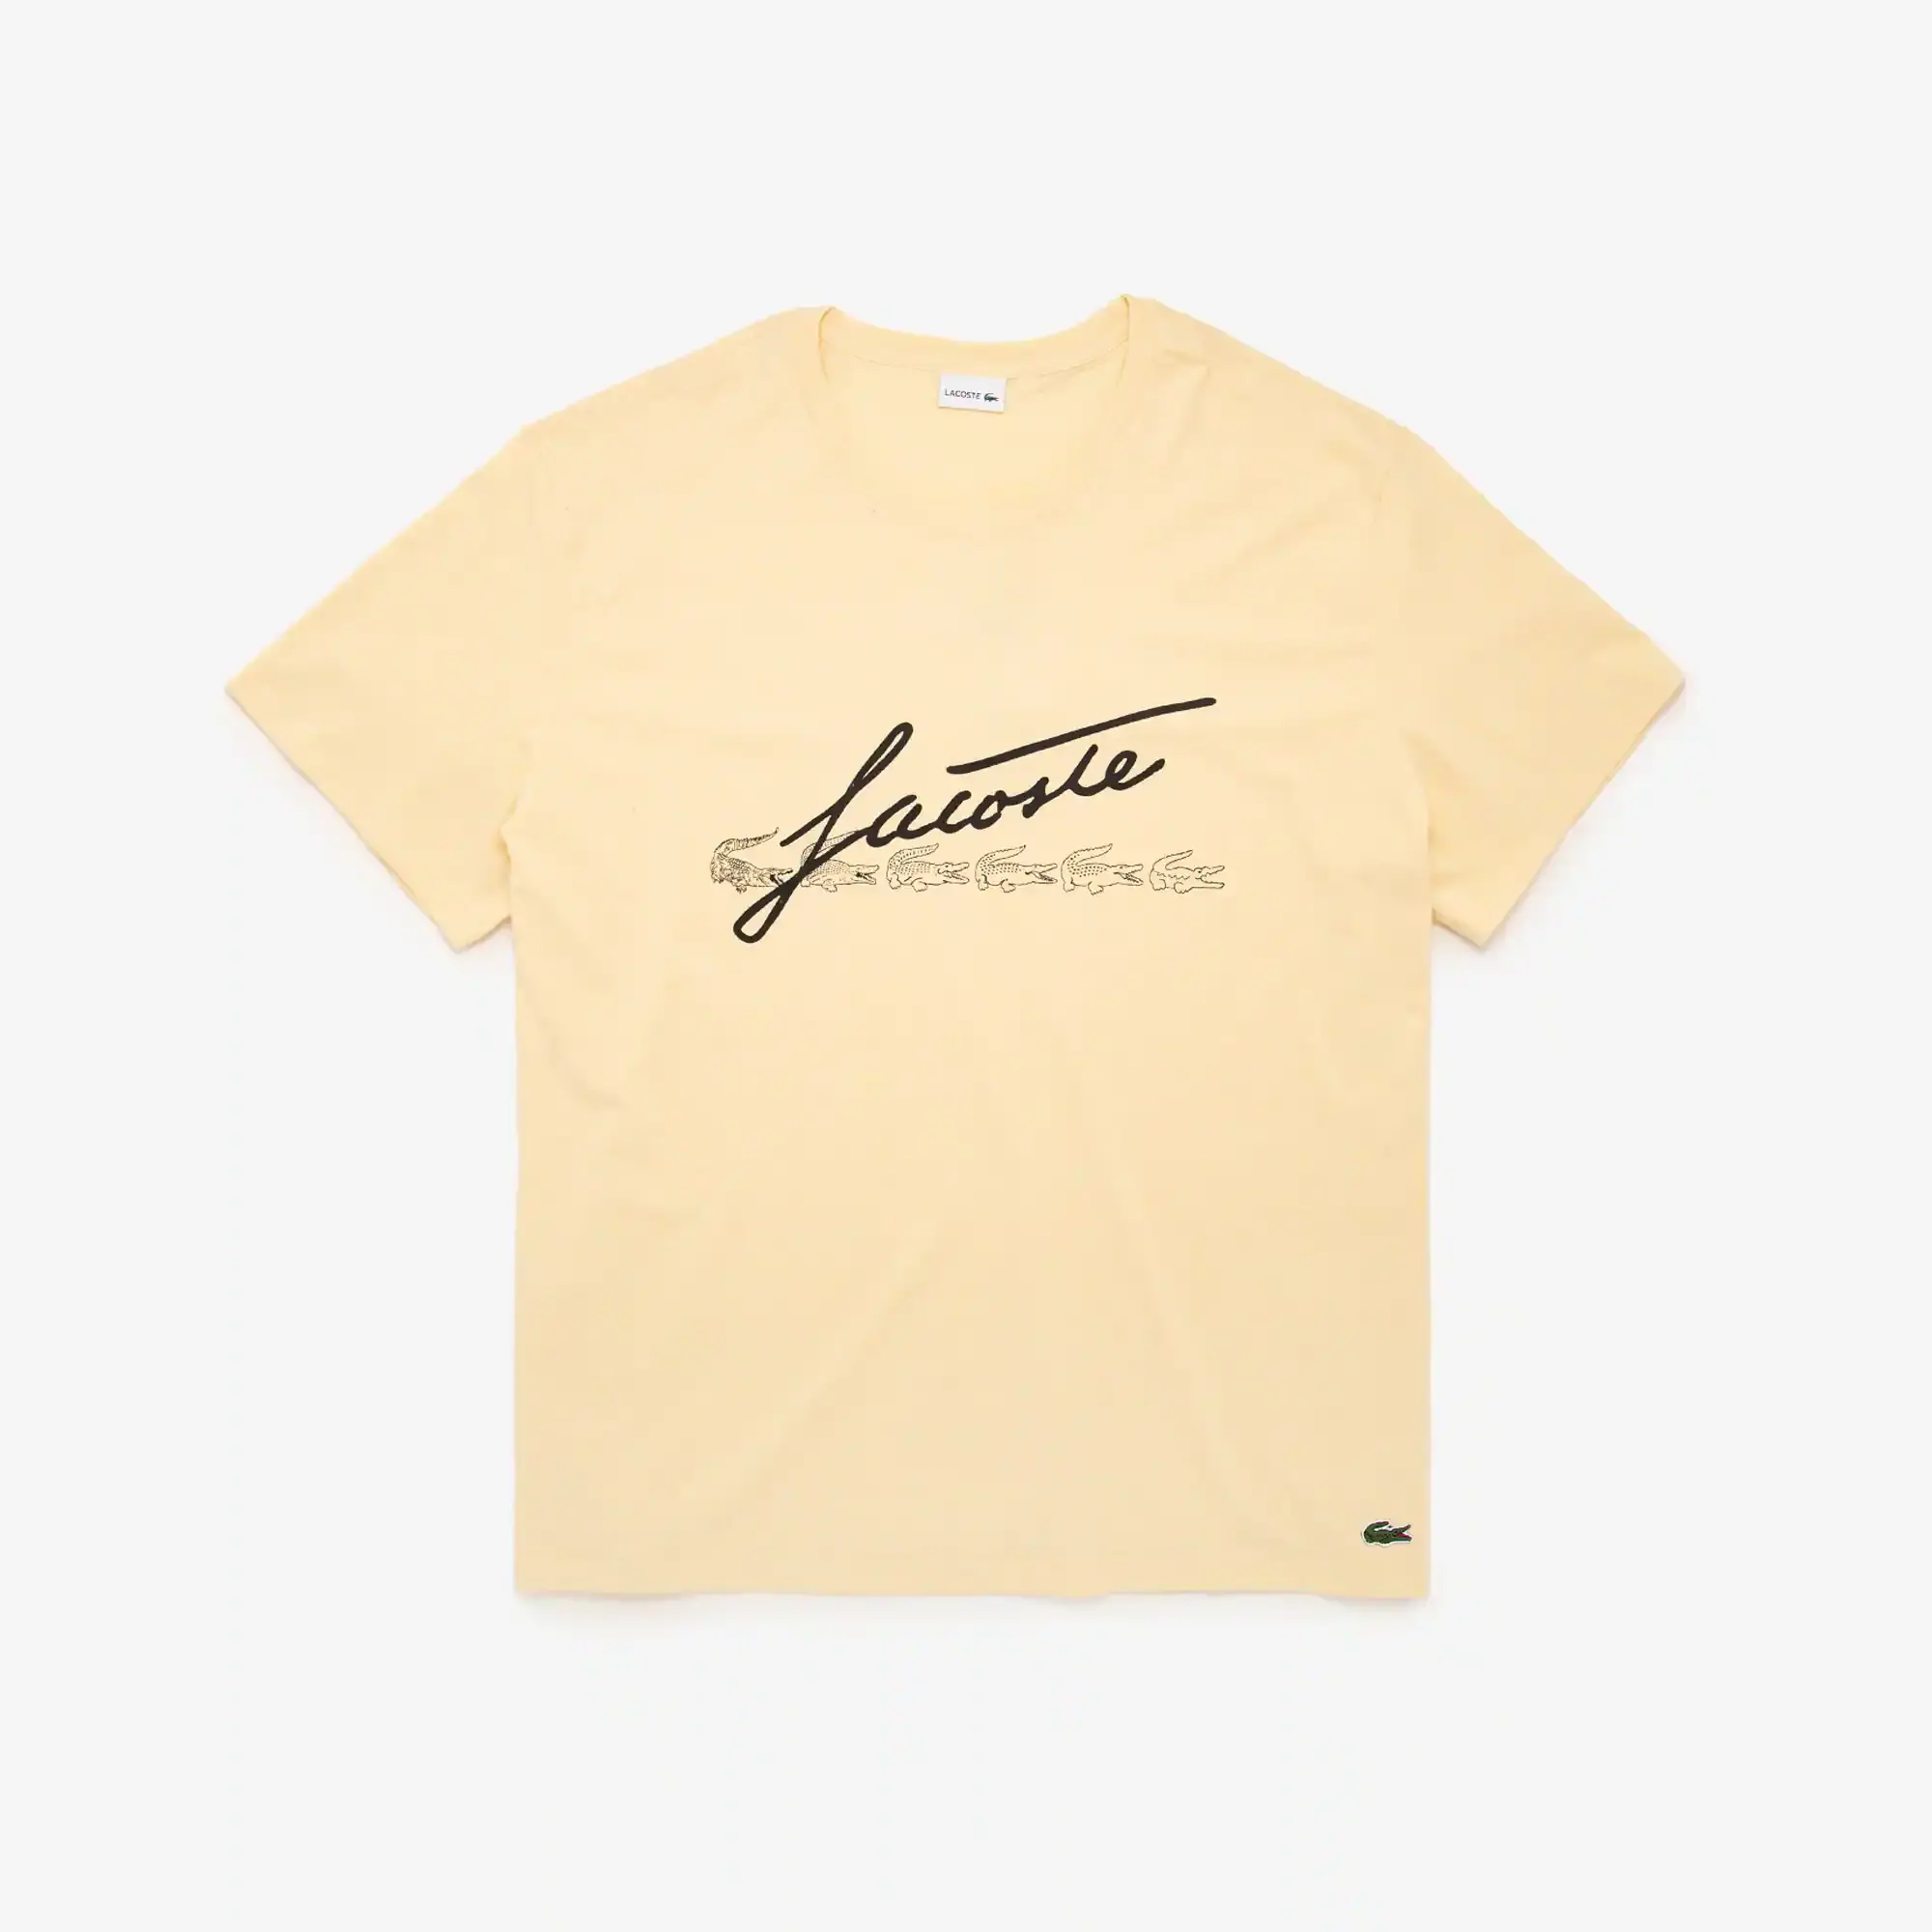 Lacoste Men's Big Fit Signature Print T-Shirt. 1